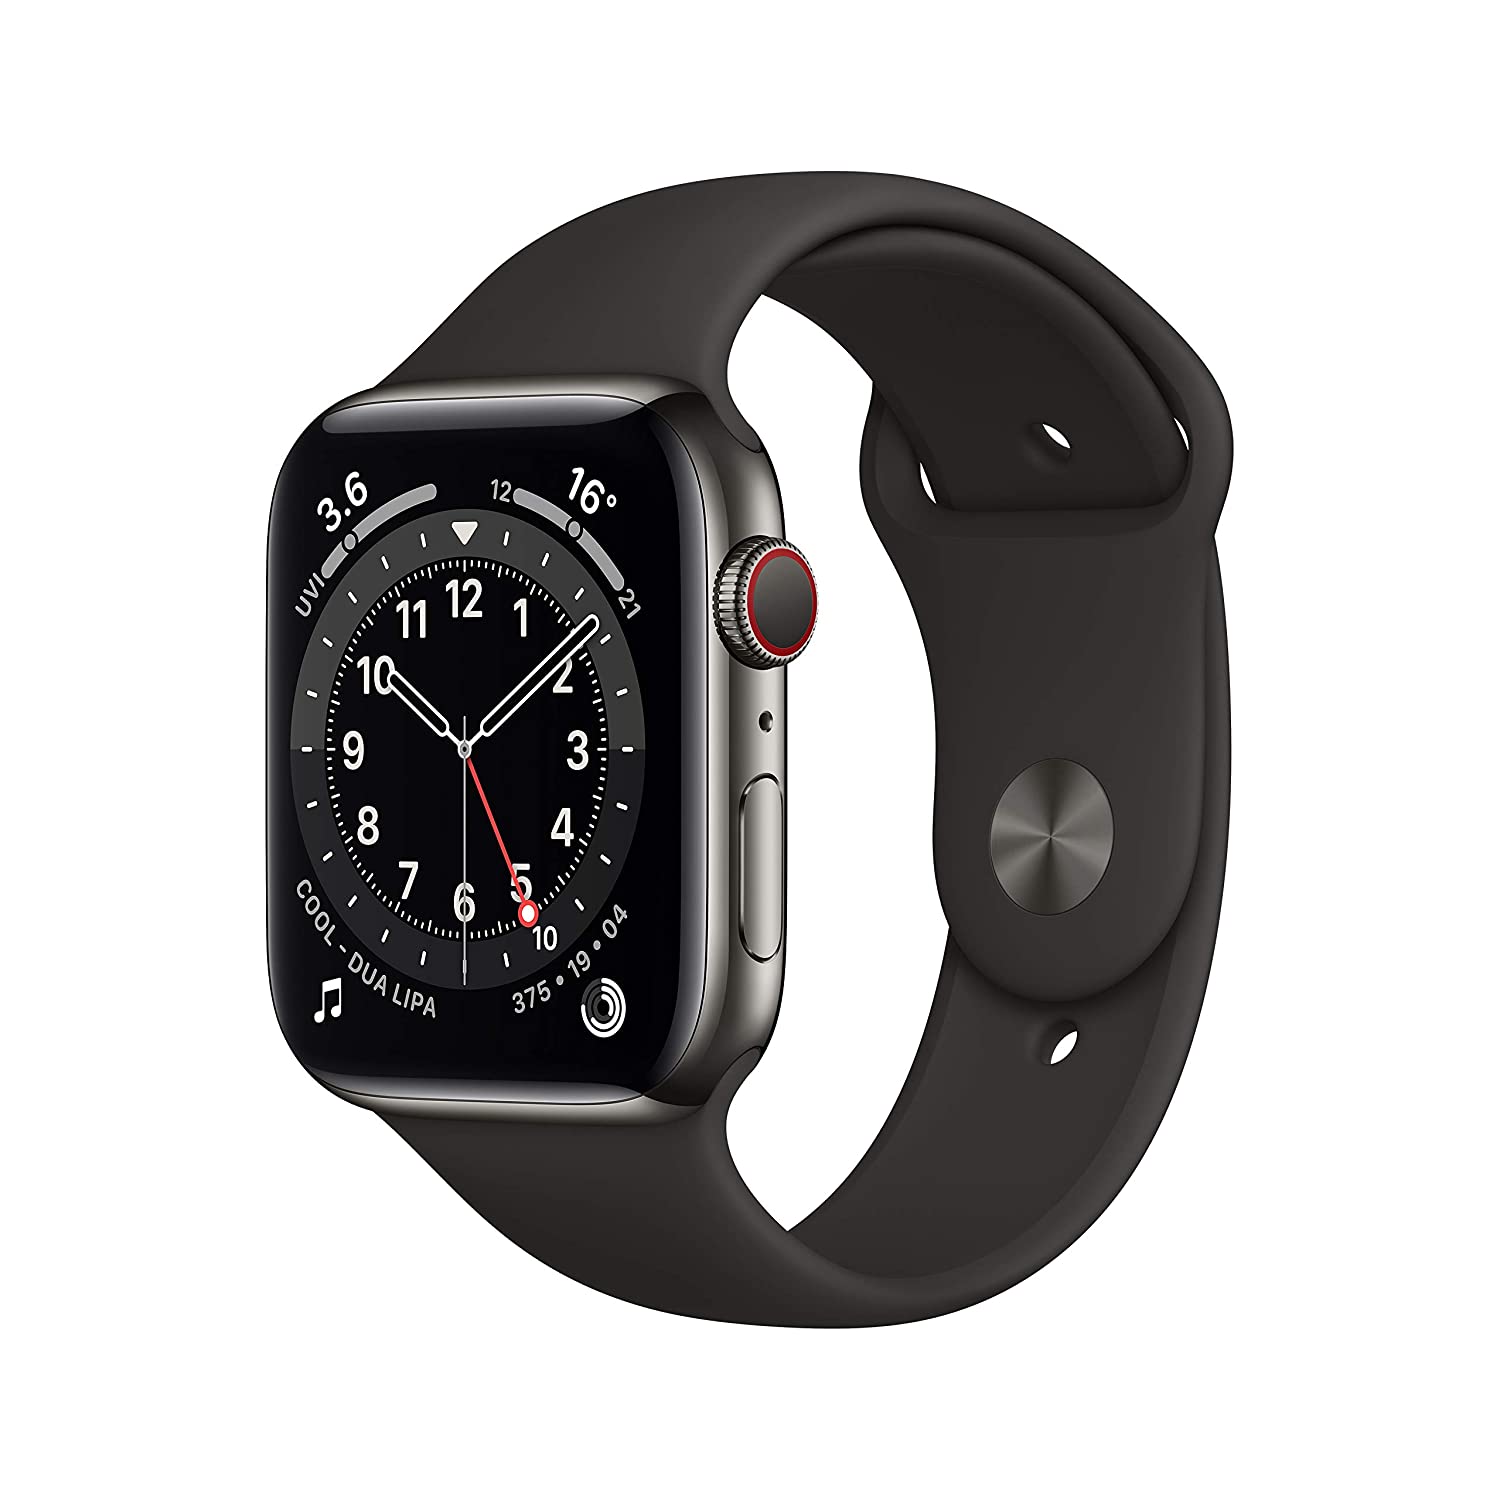 Apple watch 6, 44 mm ideal for heavy wrist